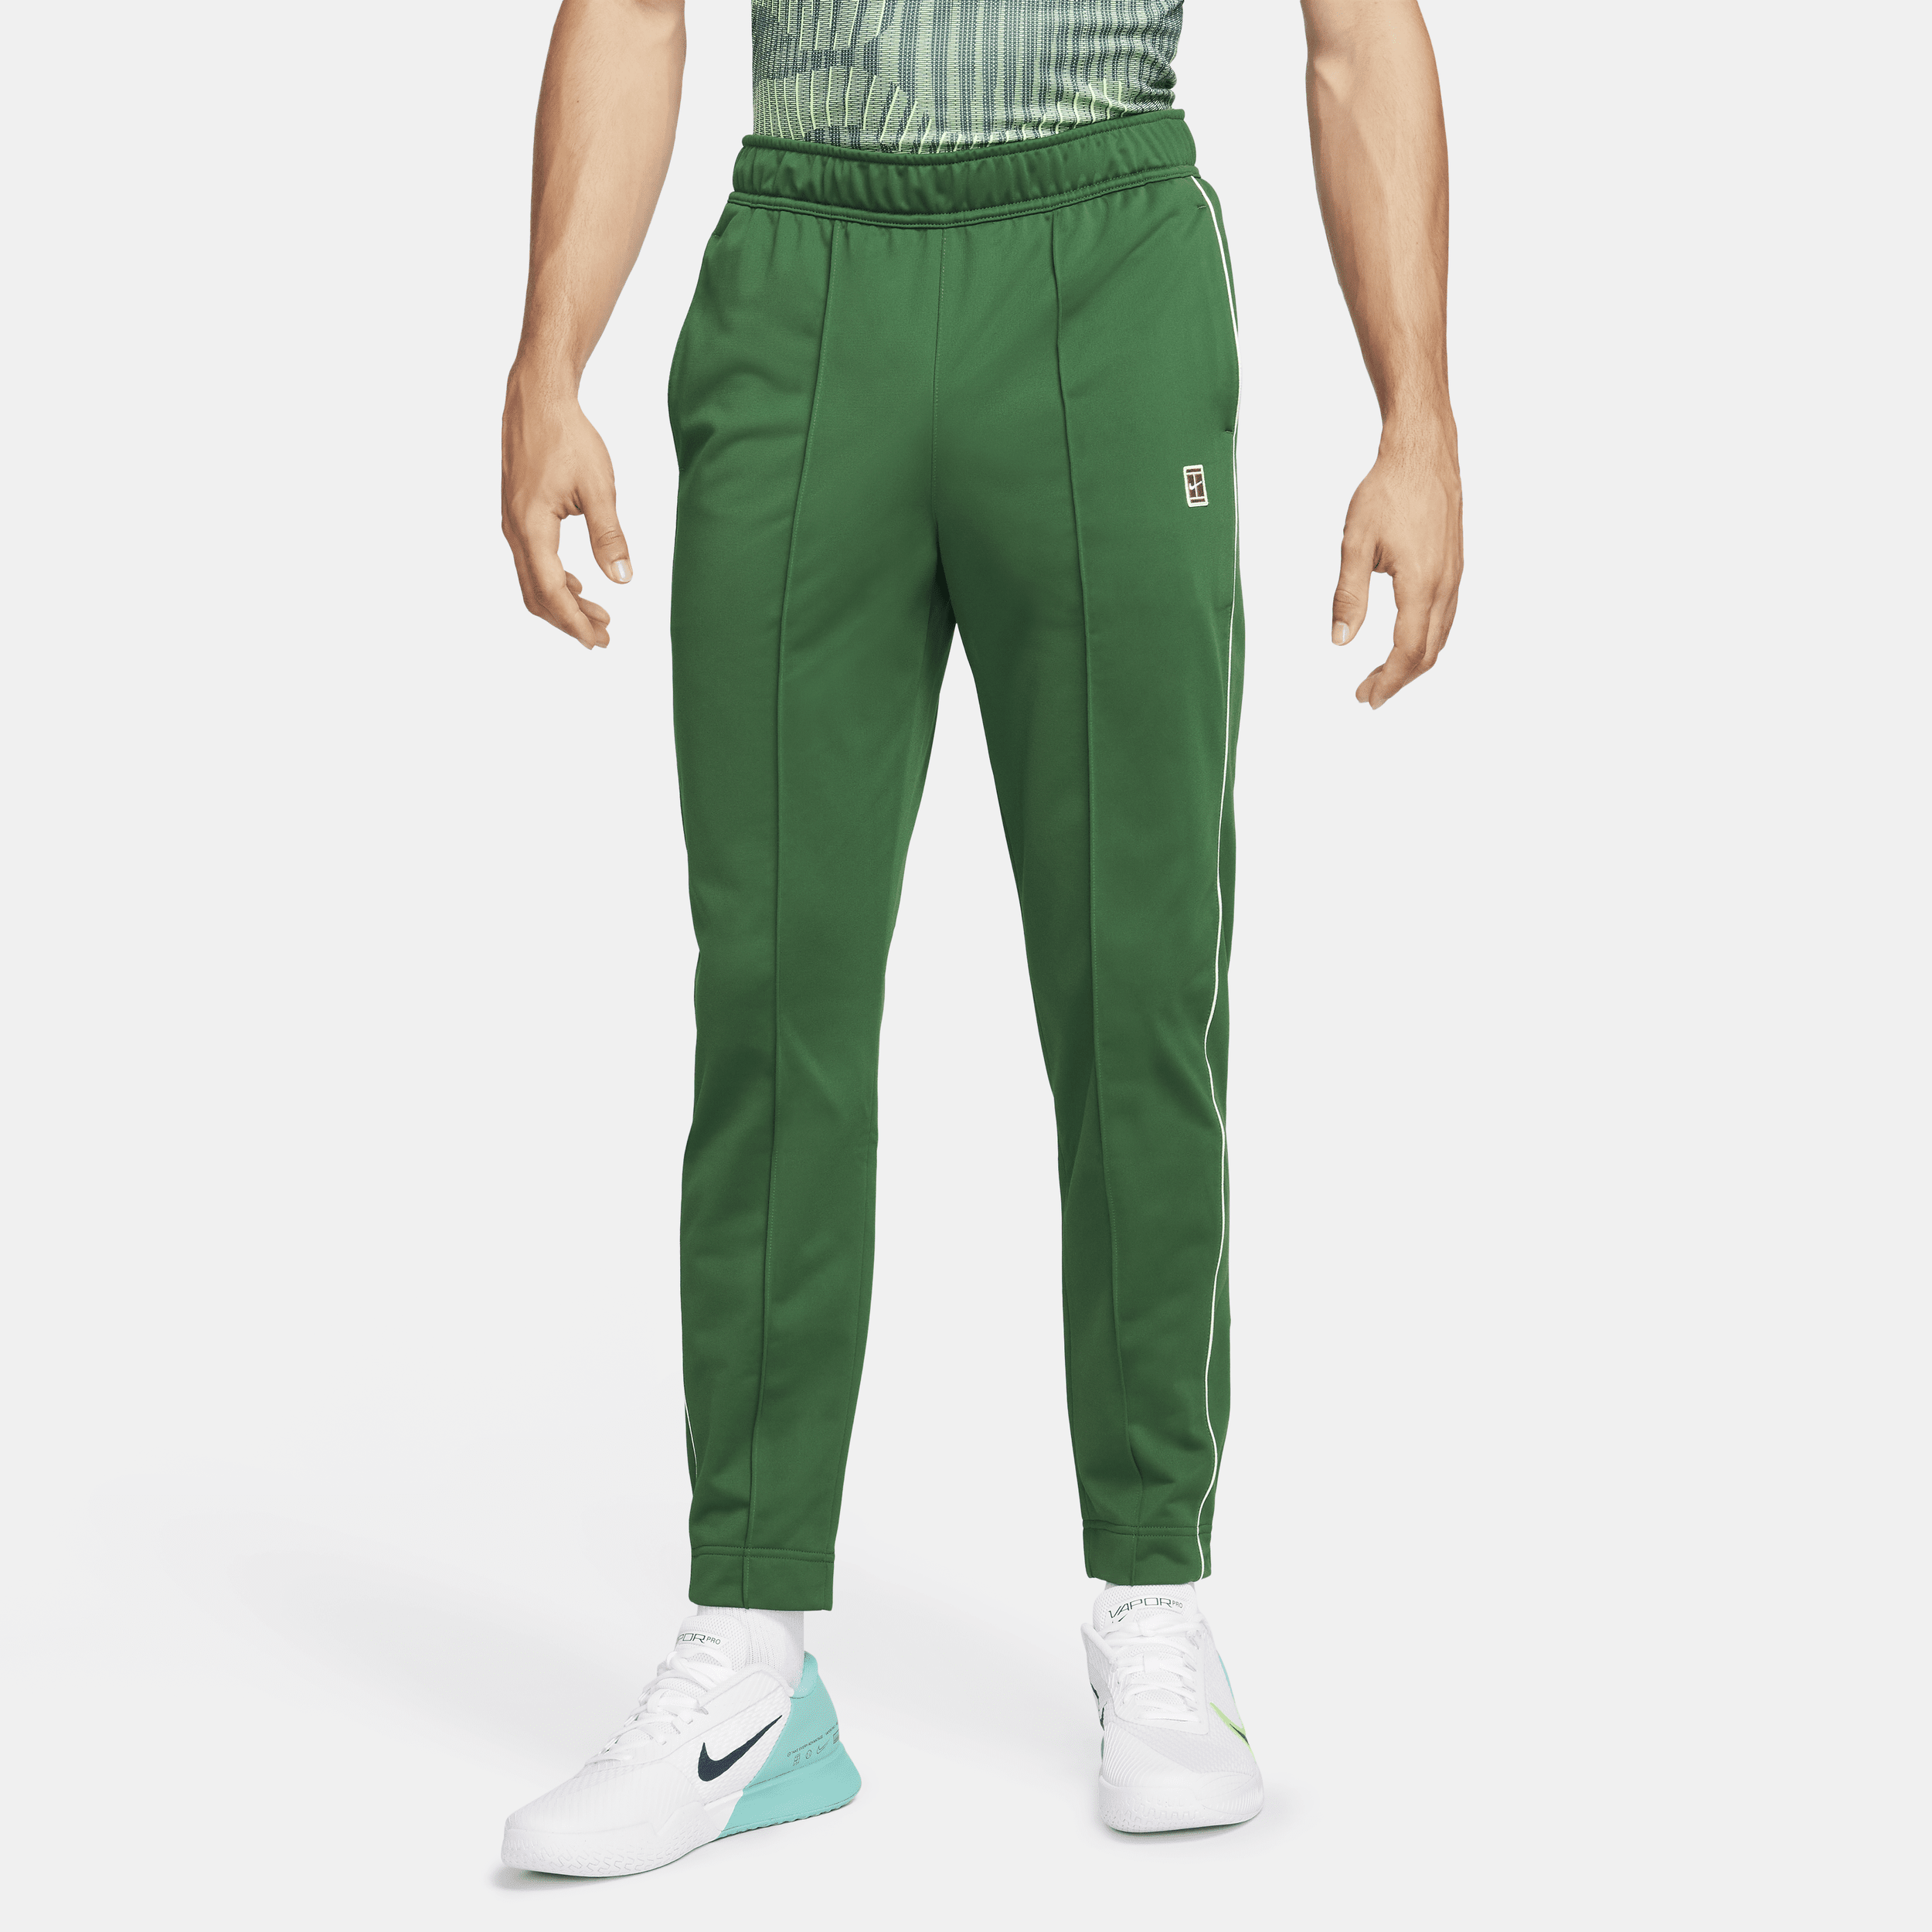 Pantaloni da tennis NikeCourt - Uomo - Verde